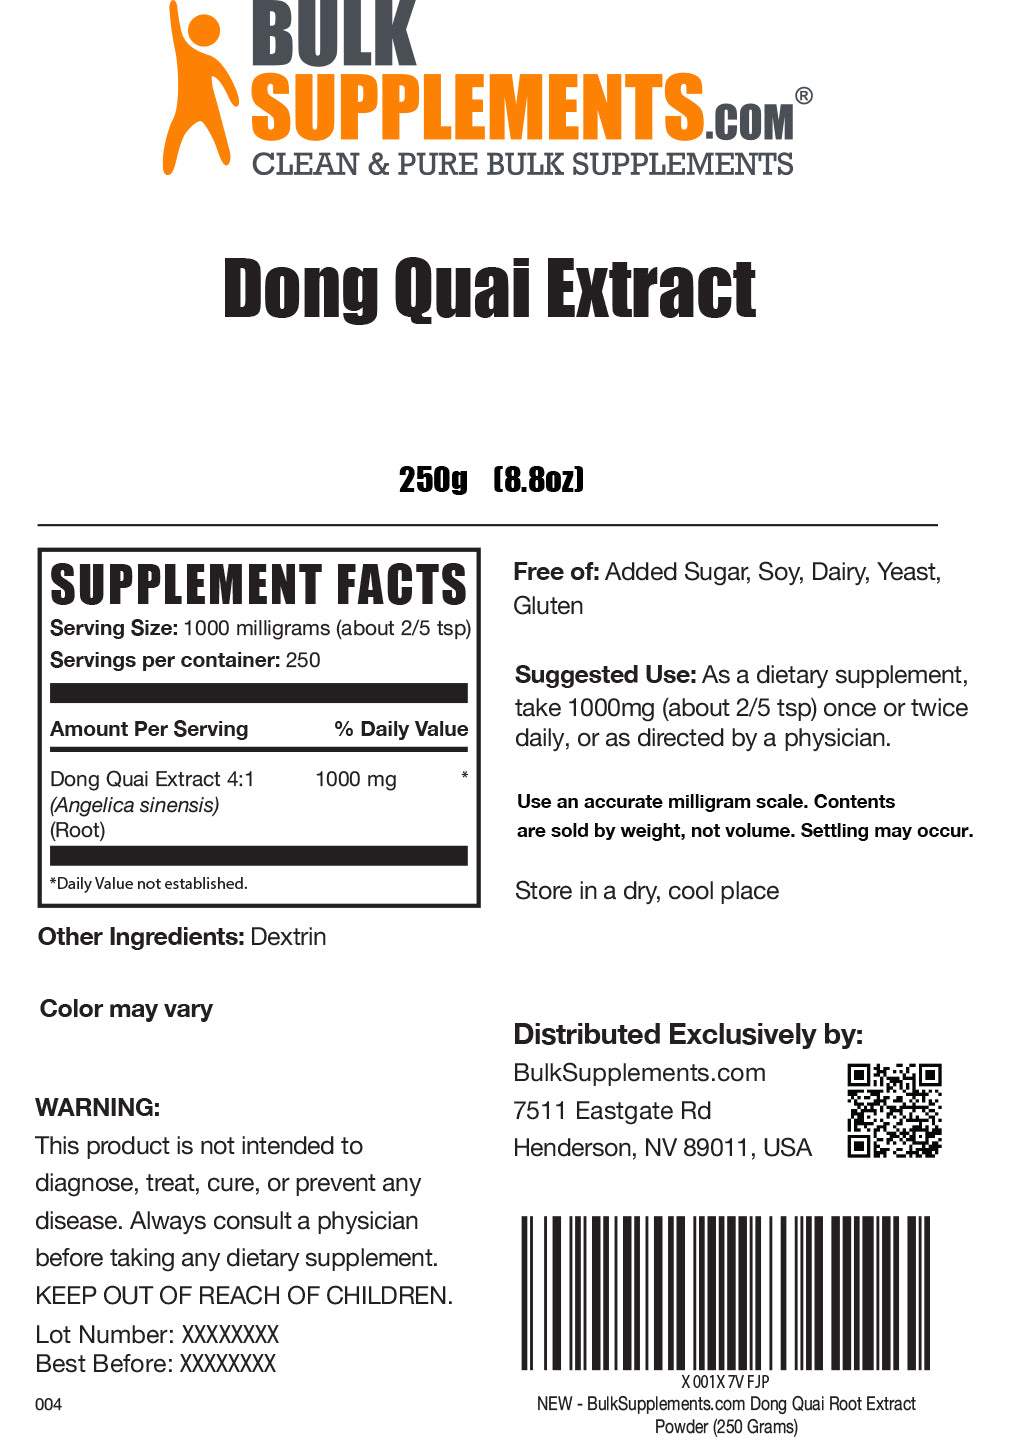 Dong Quai Root Extract powder label 250g